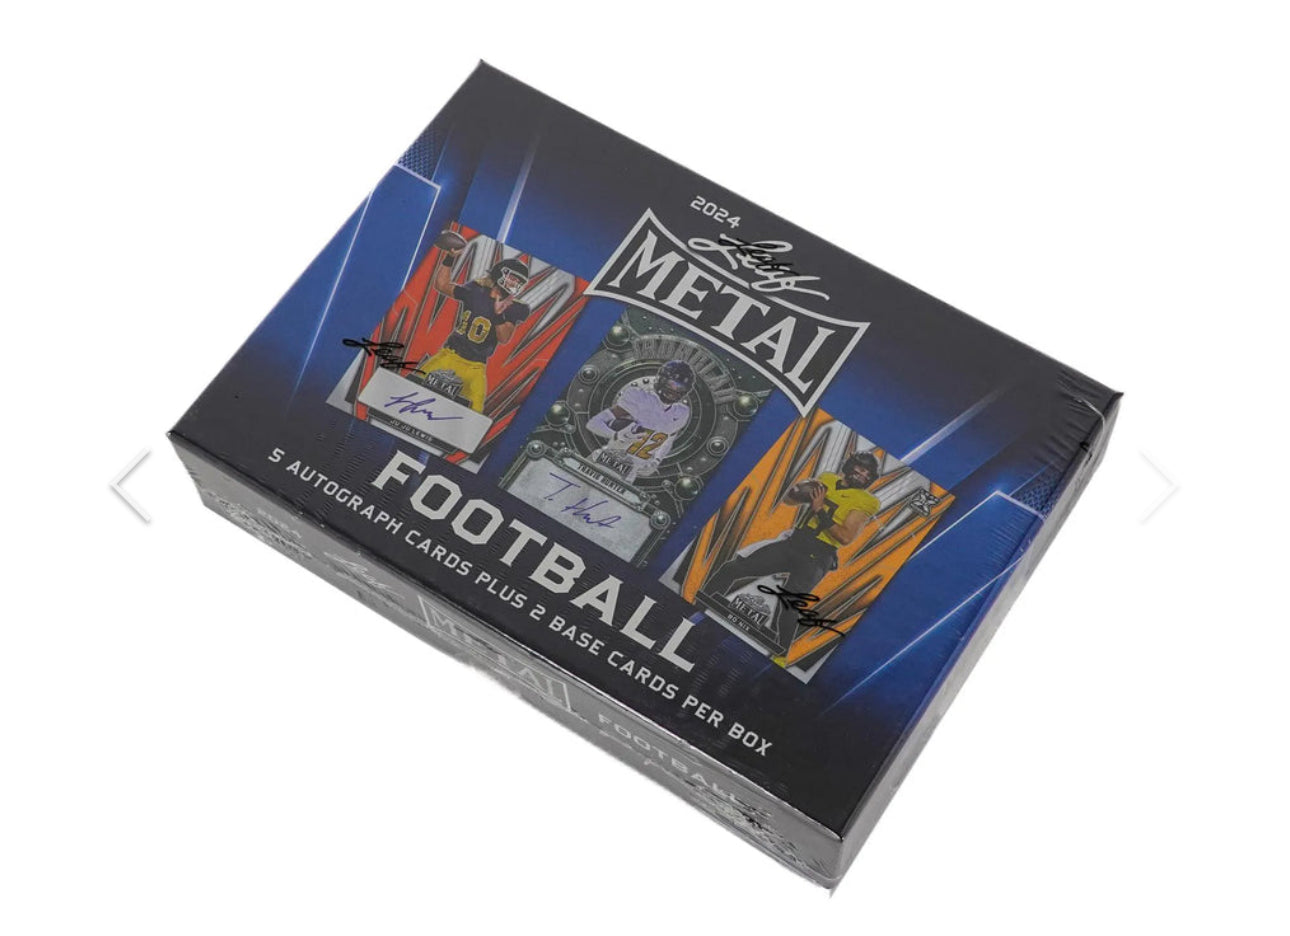 2024 Leaf Metal Football, Hobby Box